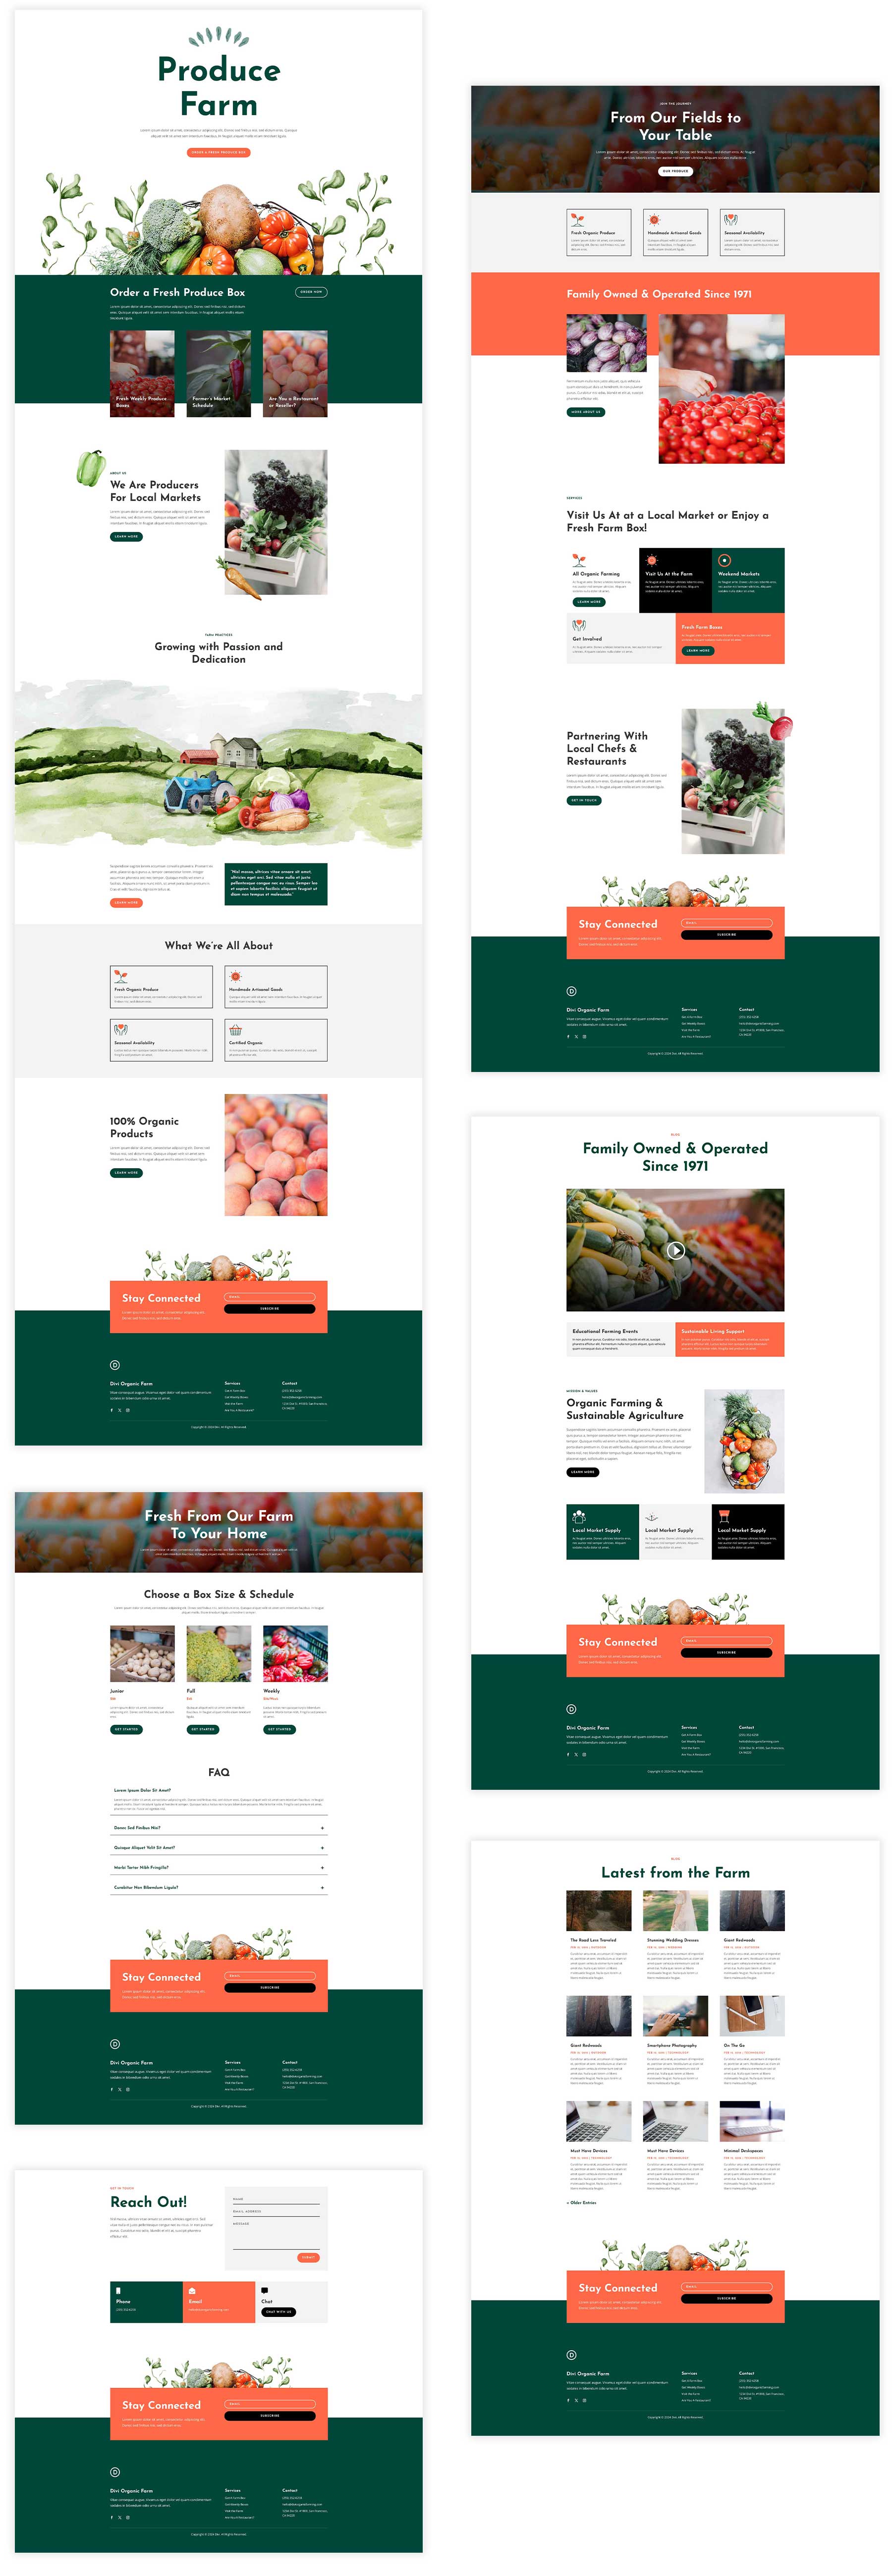 Produce Farm layout pack